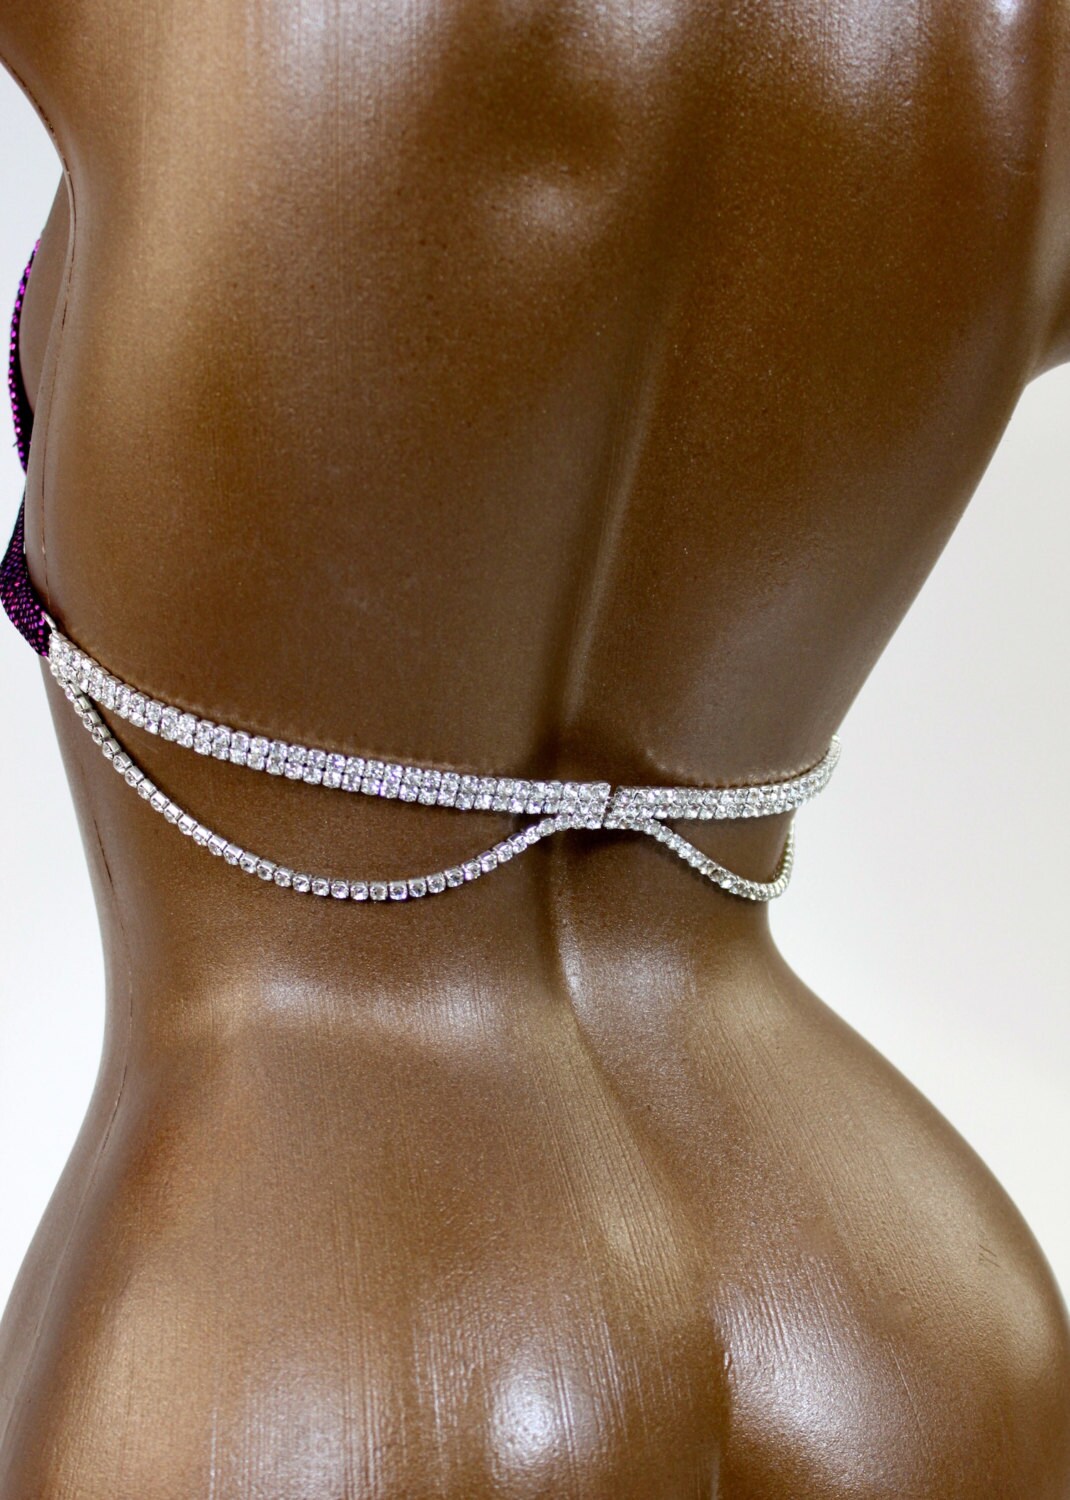 Rhinestone bra straps Dual-Chain Decorative Bra Straps Bling Crystal  Rhinestone Adjustable Removable Fancy Bra Strap Replacement For Bra Tops  Dress (Heart) 